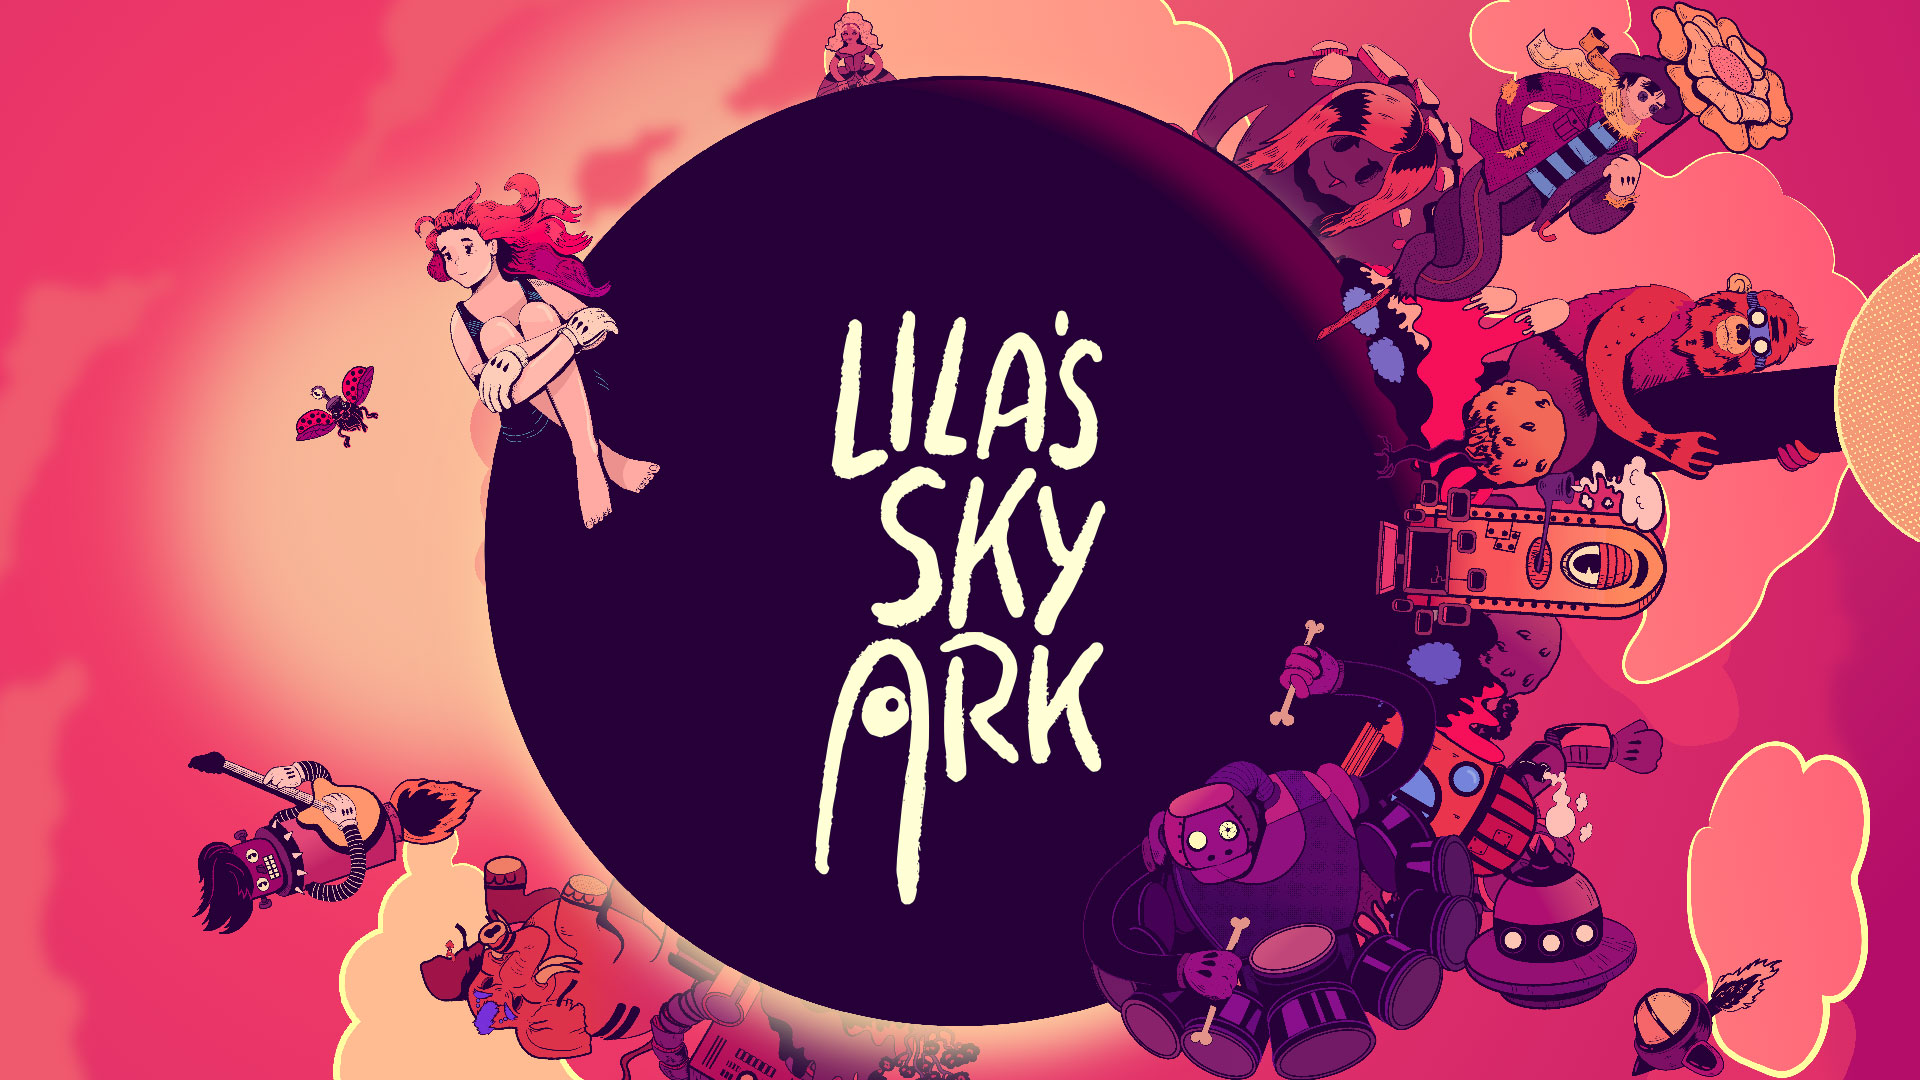 Free Lila's Sky Ark Wallpaper in 1920x1080